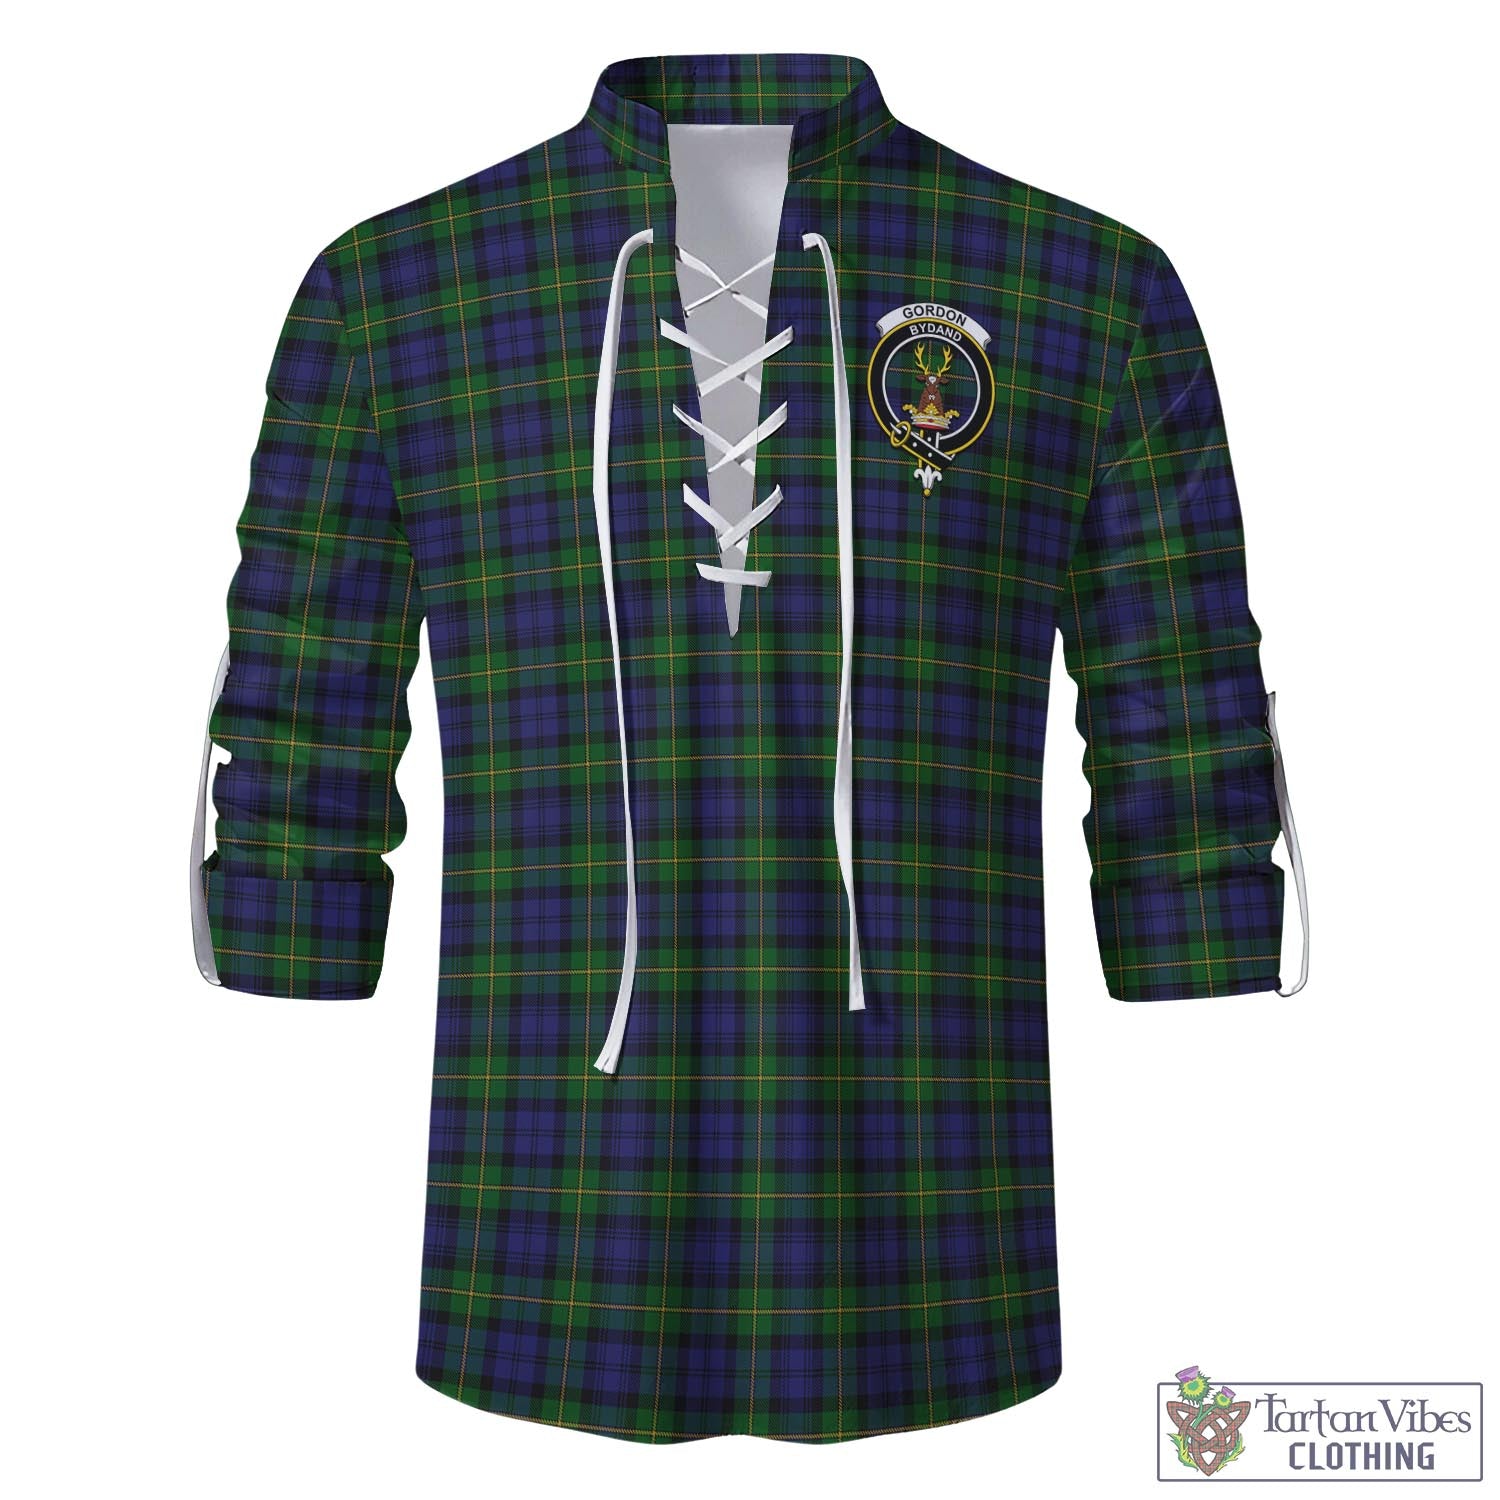 Tartan Vibes Clothing Gordon Tartan Men's Scottish Traditional Jacobite Ghillie Kilt Shirt with Family Crest